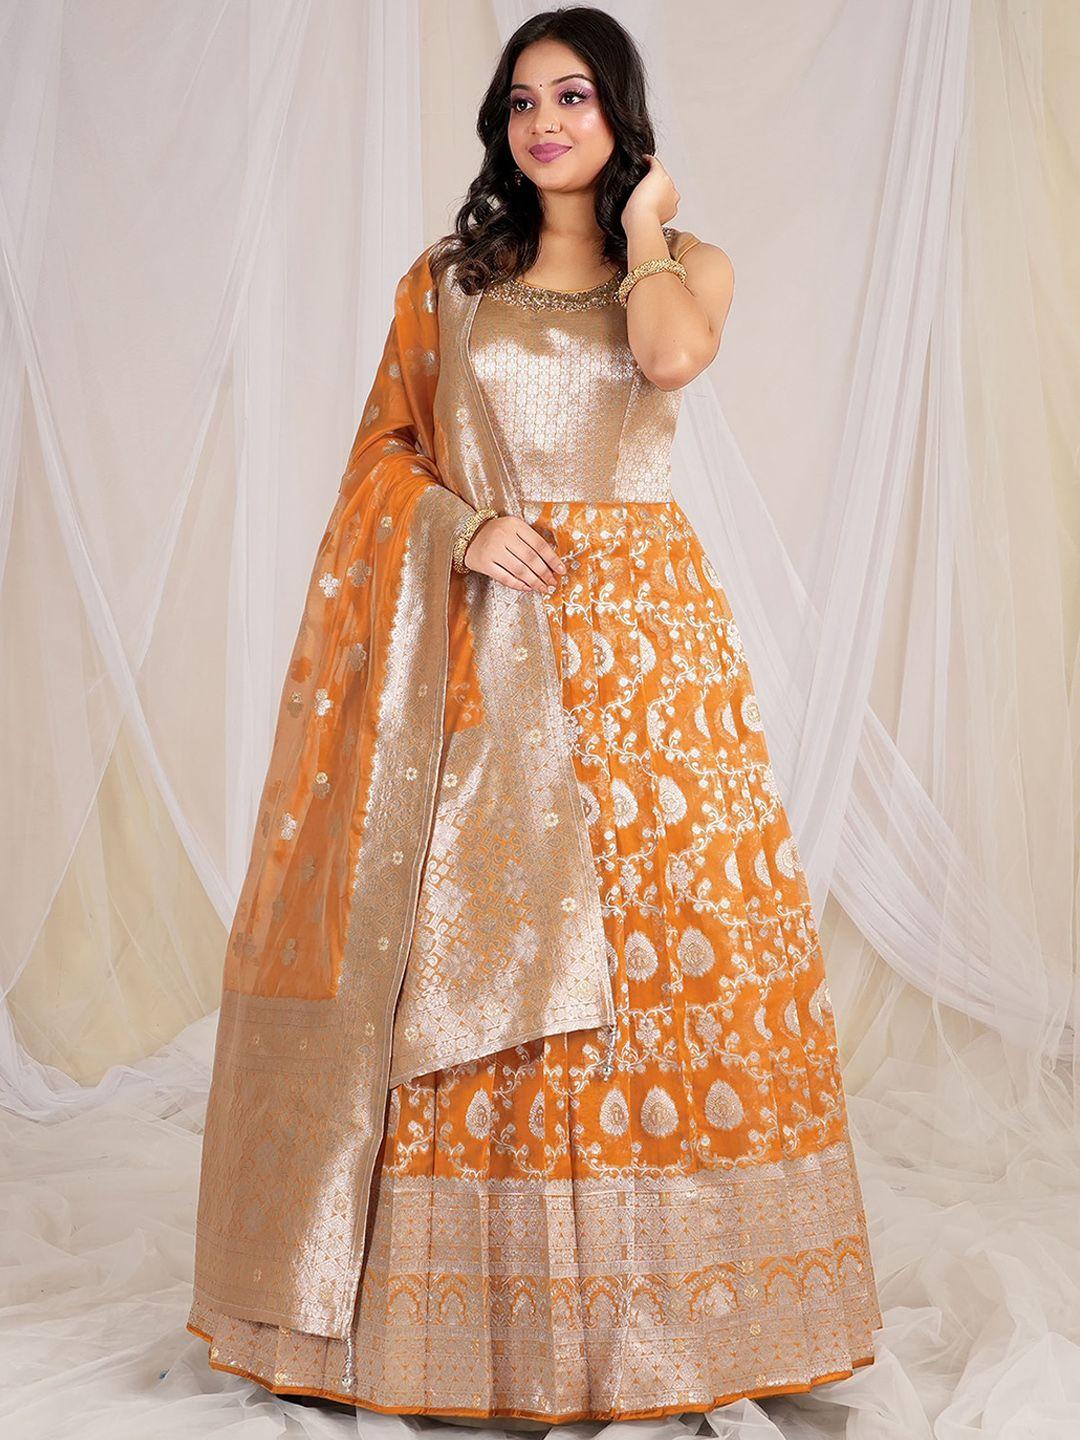 odette ethnic motifs woven design sleeveless silk embellished maxi ethnic dress